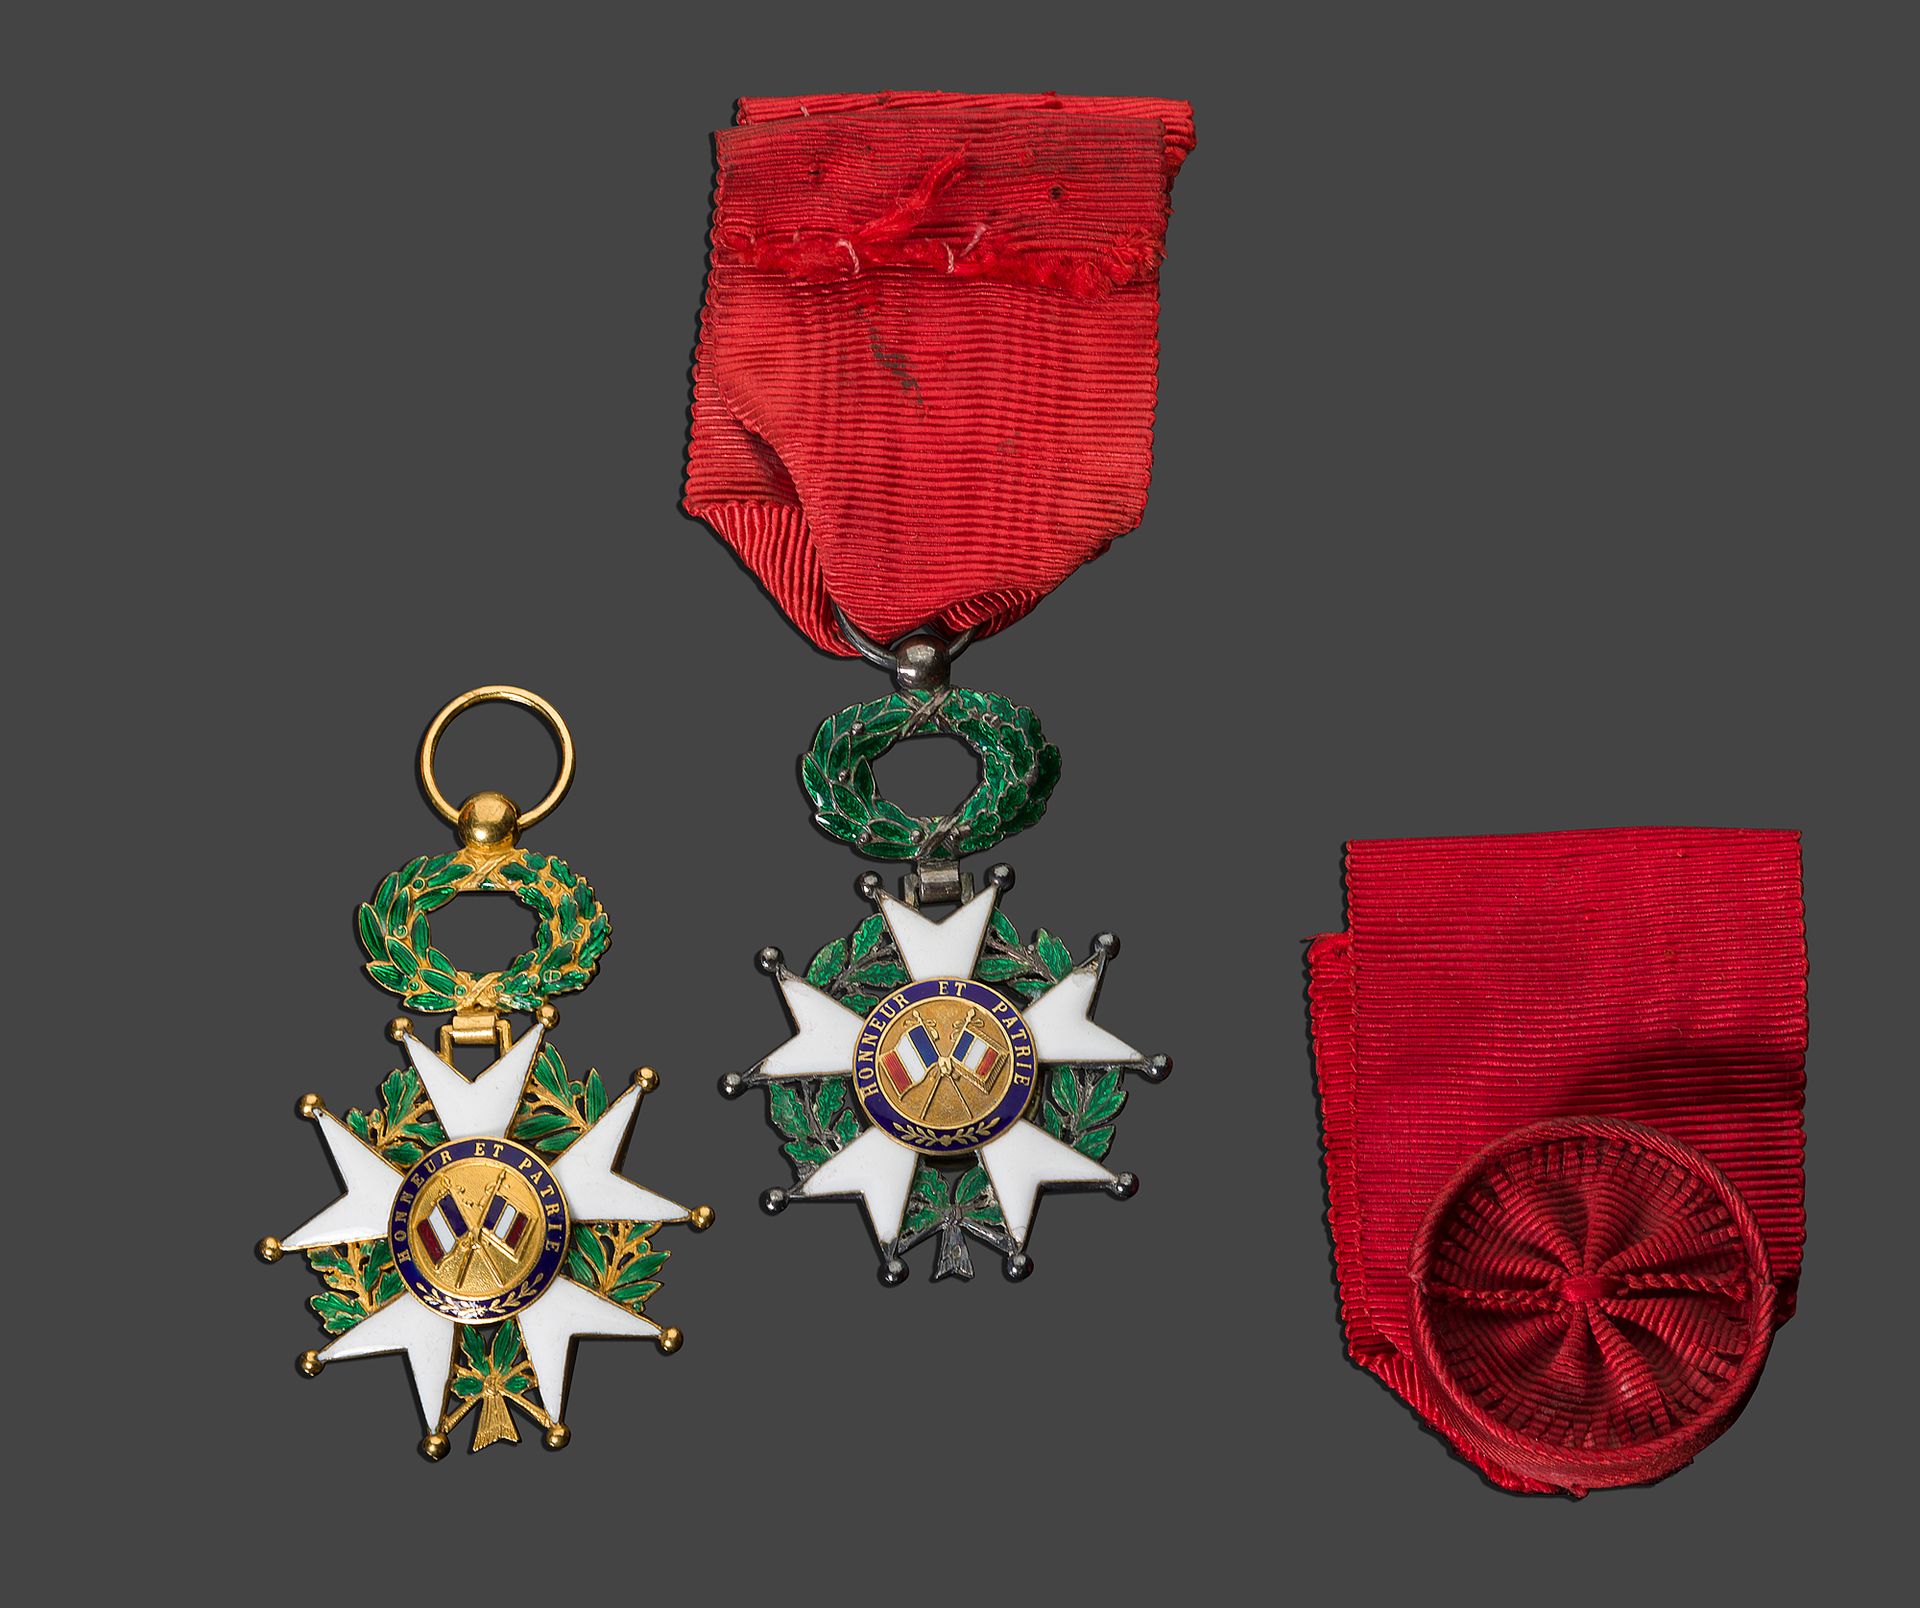 Null 法国

金质荣誉军团勋章（第750次）和银质荣誉军团勋章（第925次），红色缎带。

第五共和国

H.6.8厘米

金质荣誉军团勋章 16.15克
&hellip;